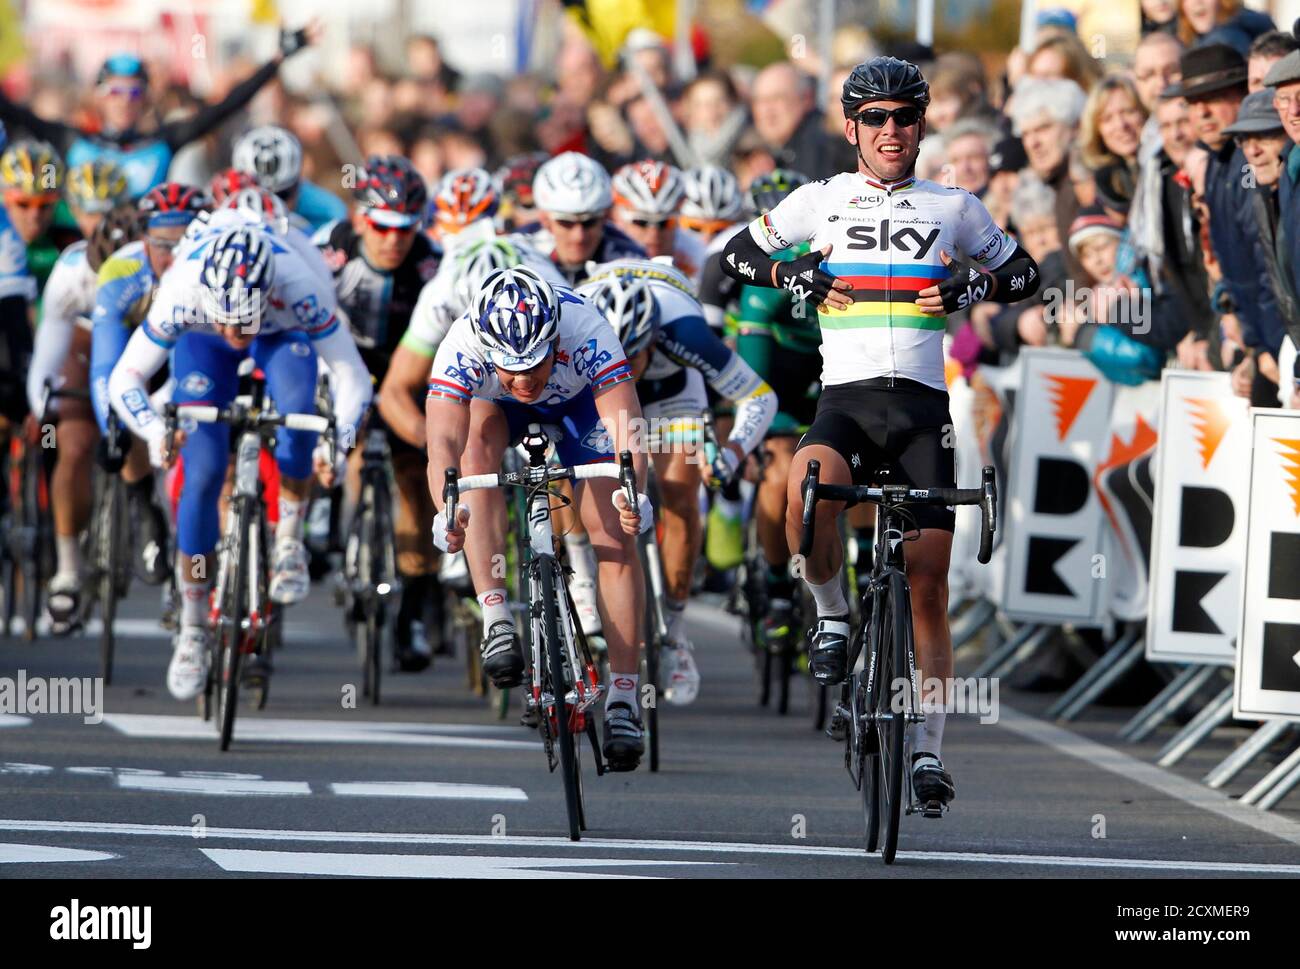 Team Sky rider Mark Cavendish (R) of Britain celebrates as he wins the Kuurne-Brussels-Kuurne cycling race in Kuurne February 26, 2012. Cavendish the race ahead of FDJ rider Yauheni Hutarovich (